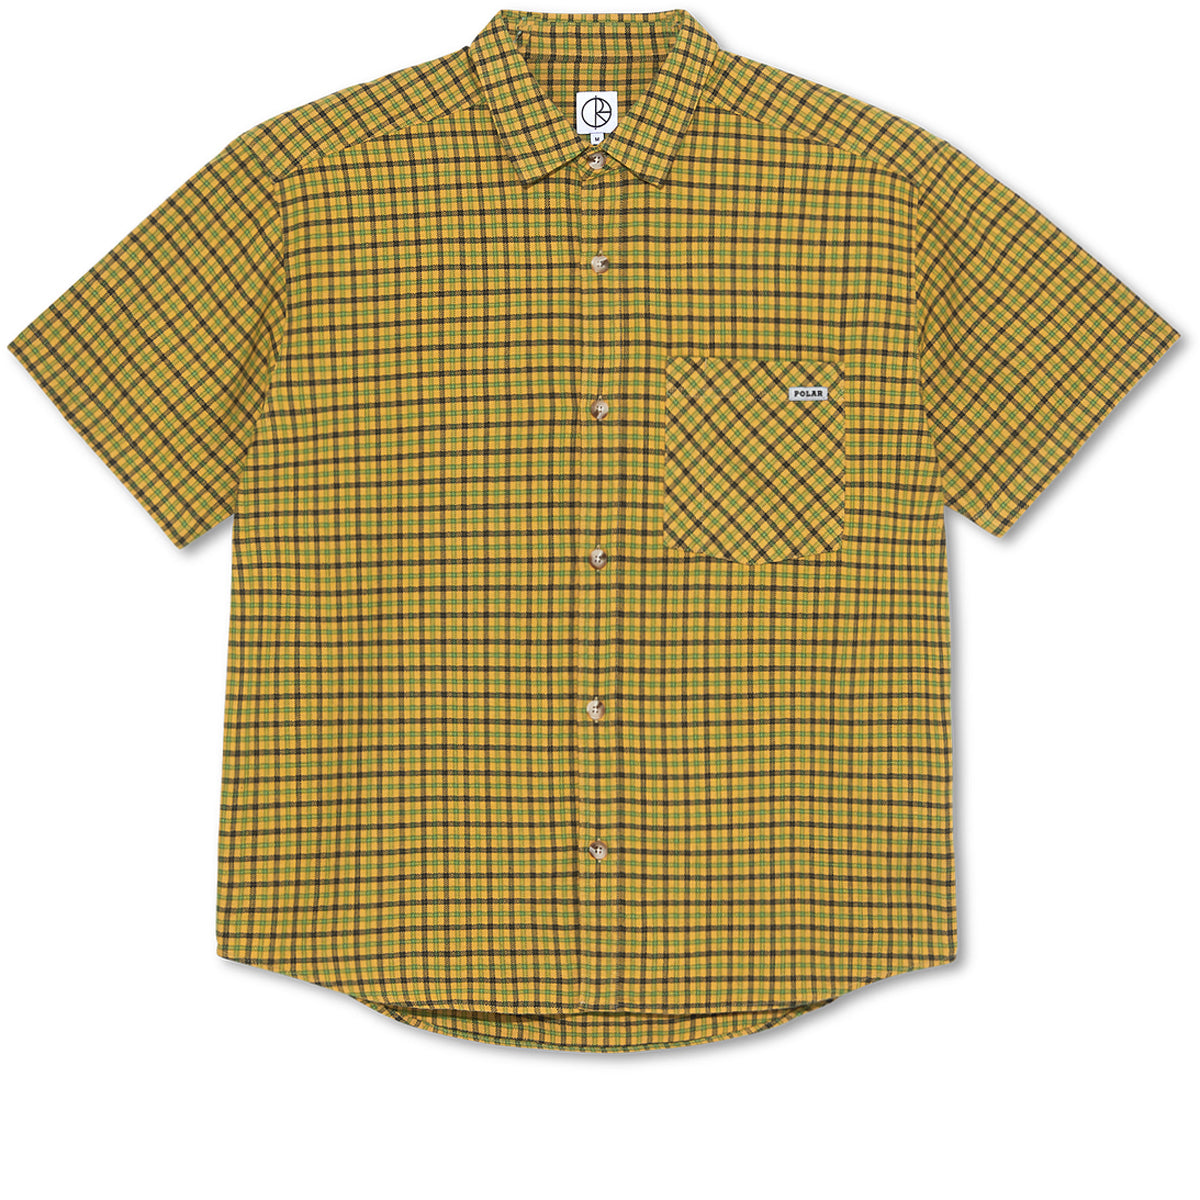 Polar Mitchell Twill Shirt - Yellow image 1